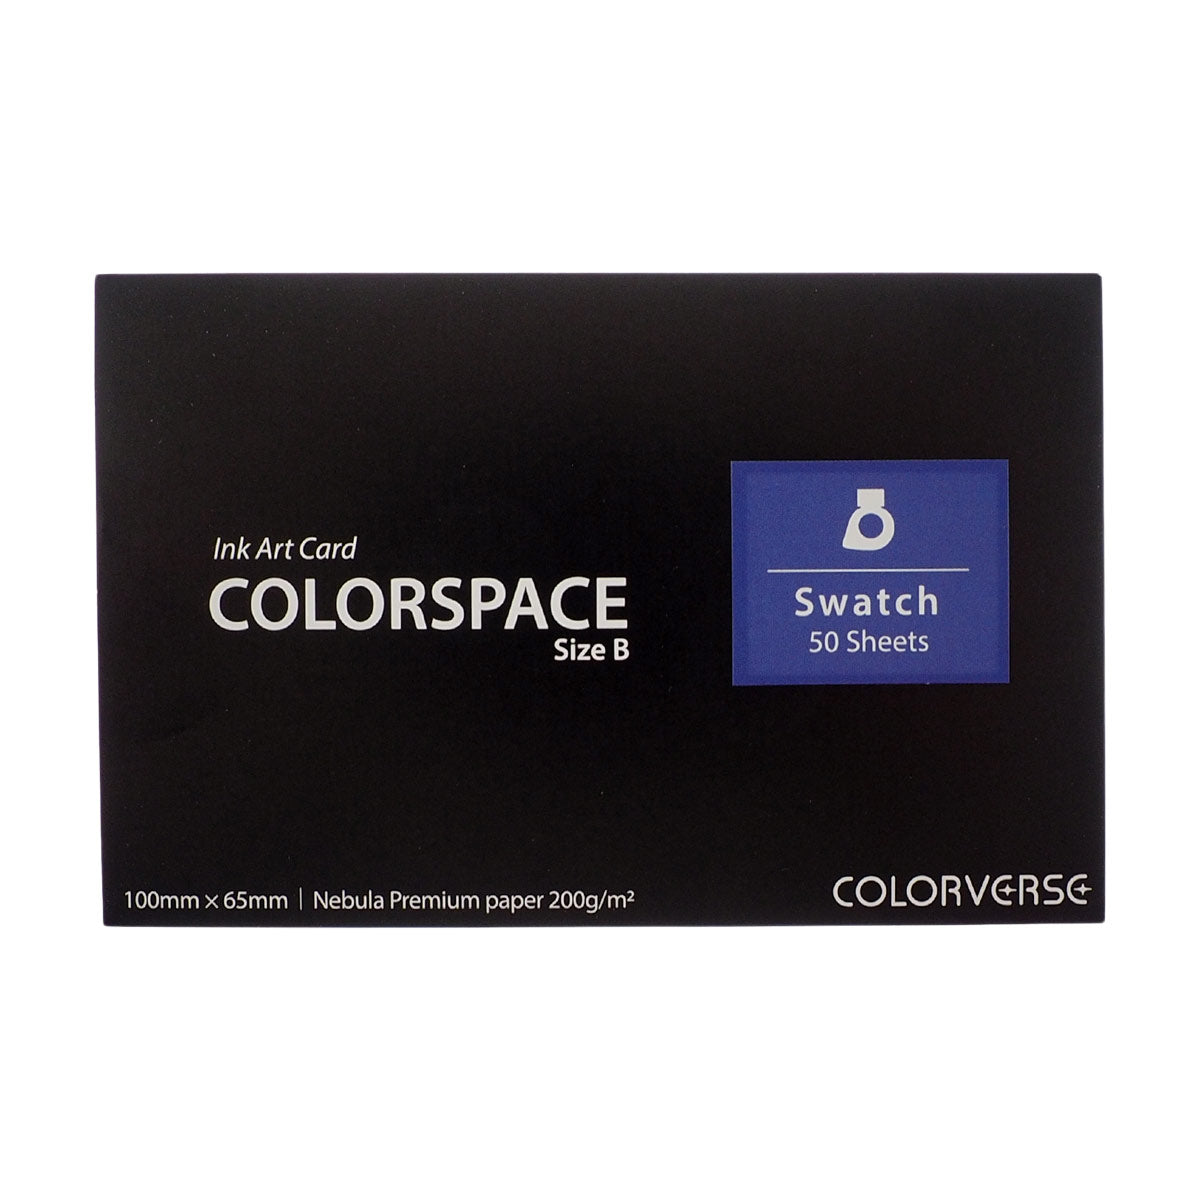 Colorverse Tintenswatch Karten